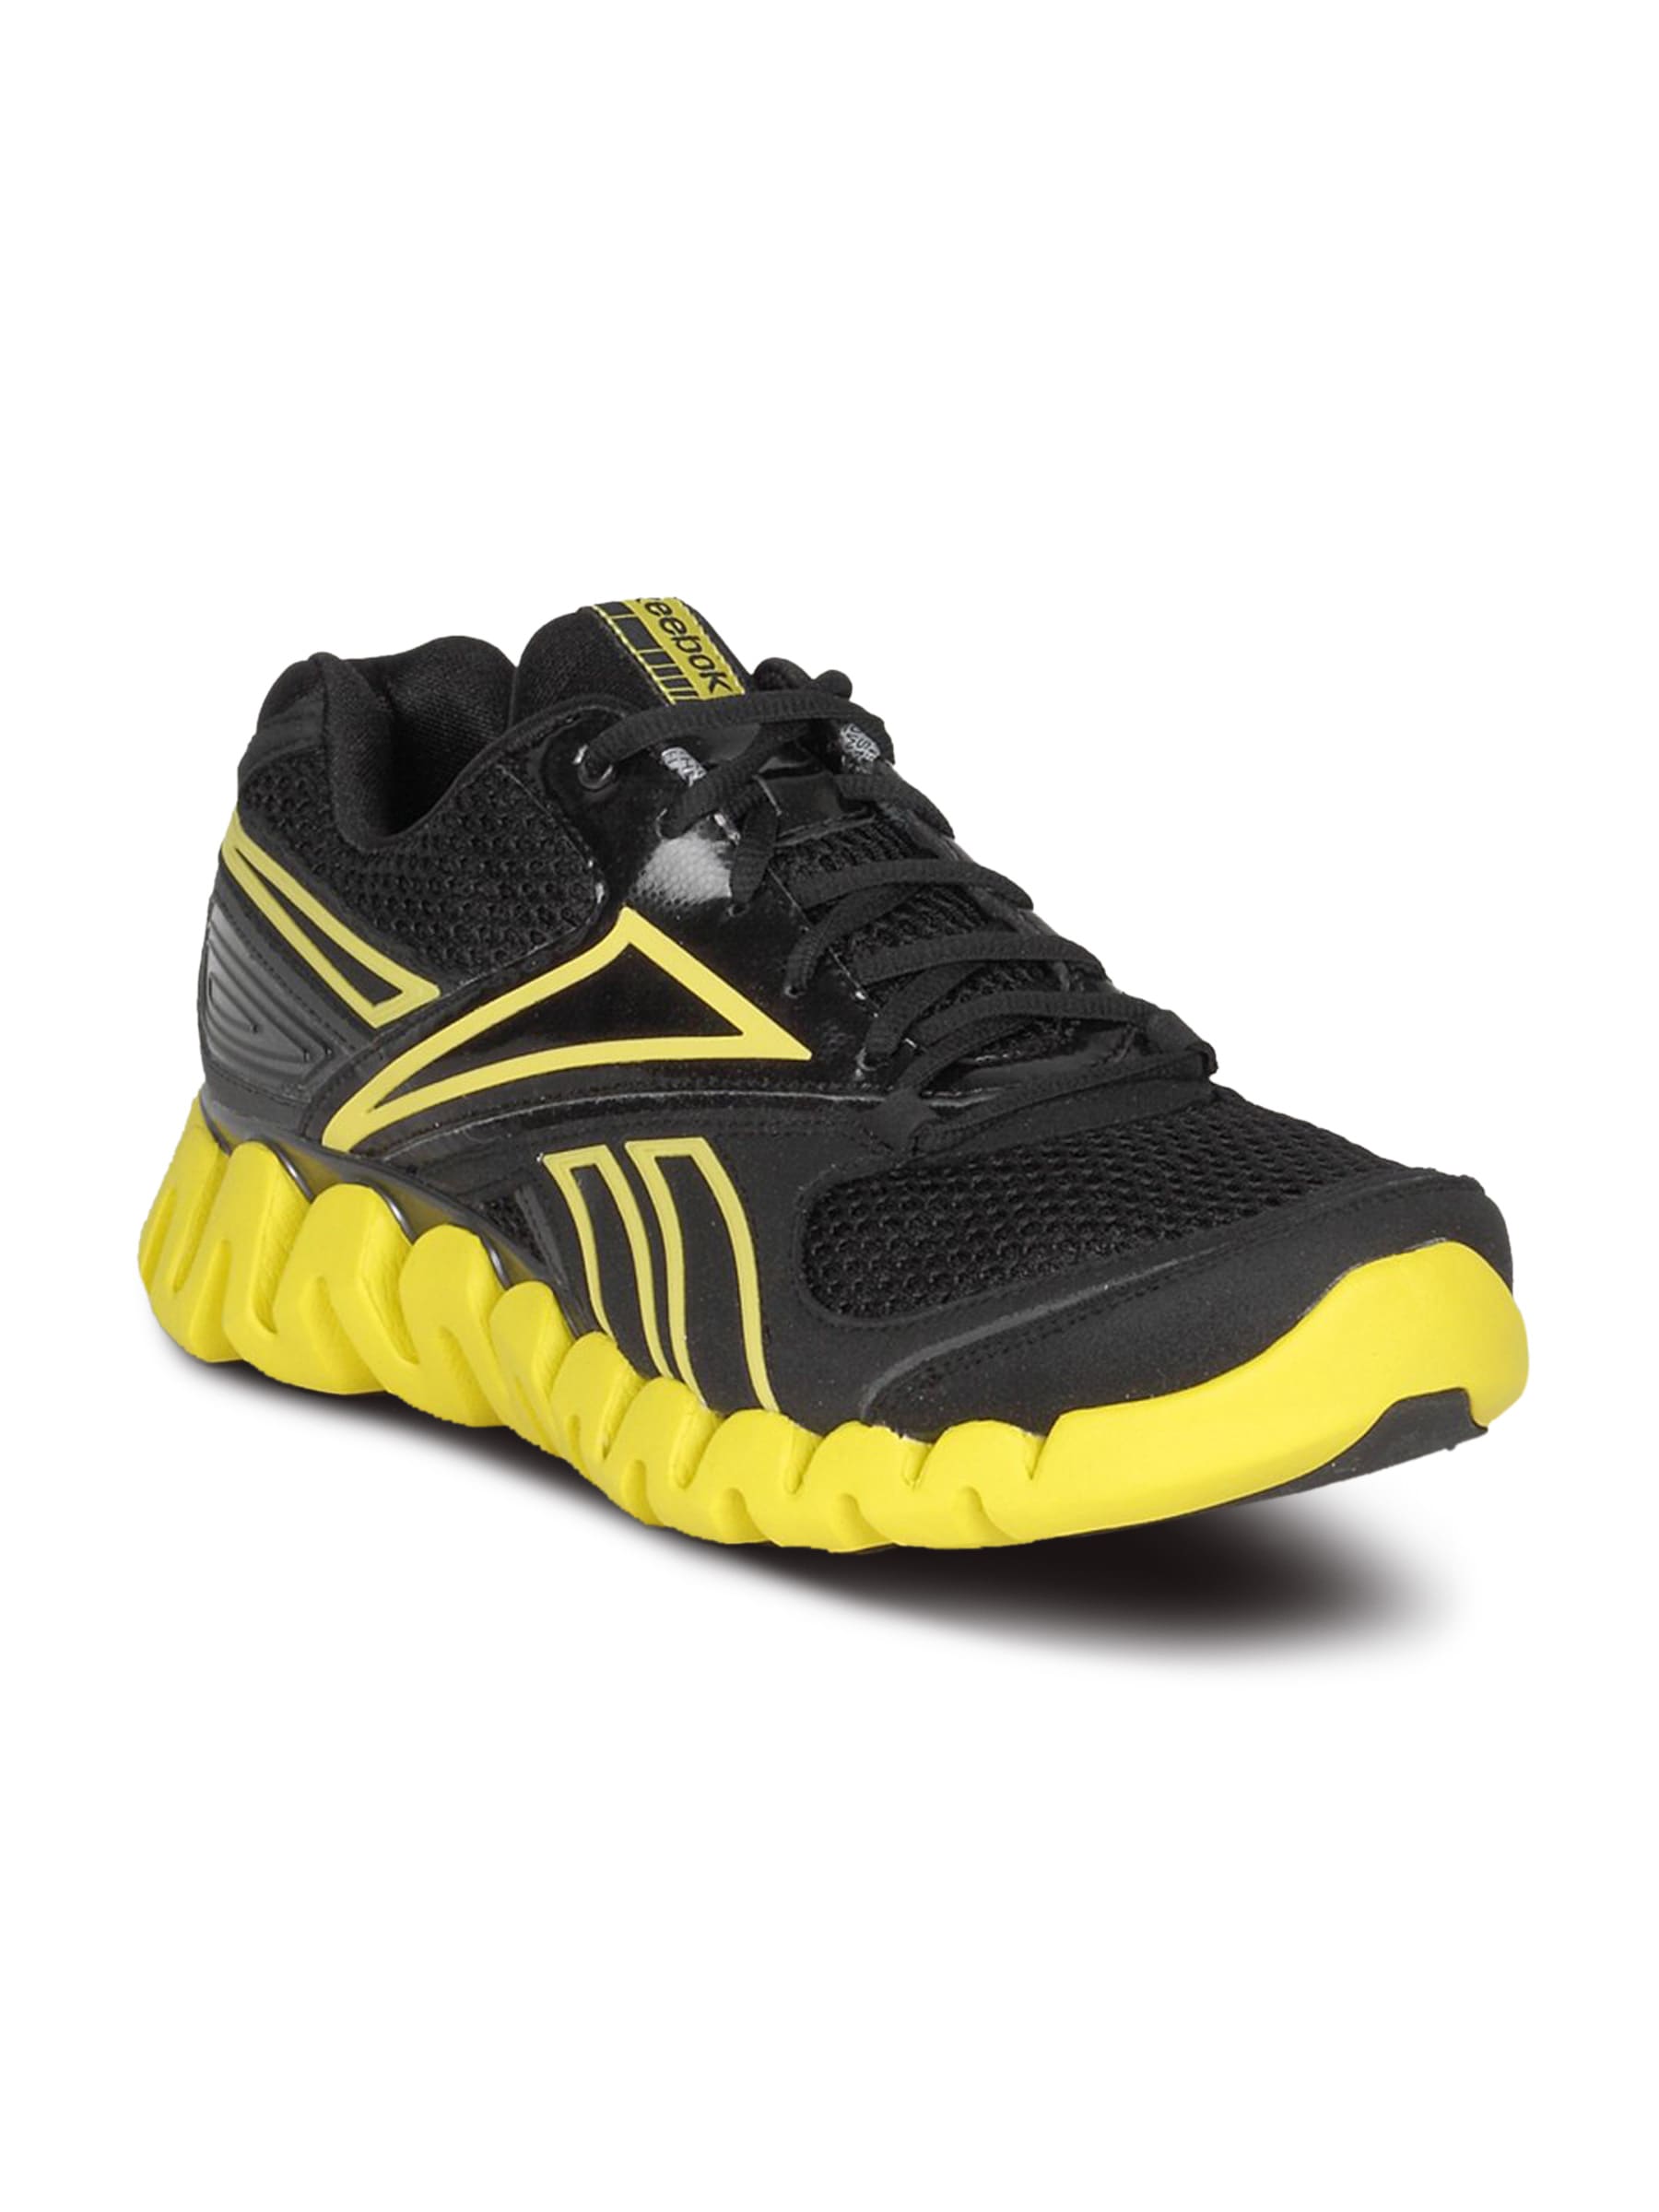 Reebok Men's Zigfuel Black Yellow Shoe